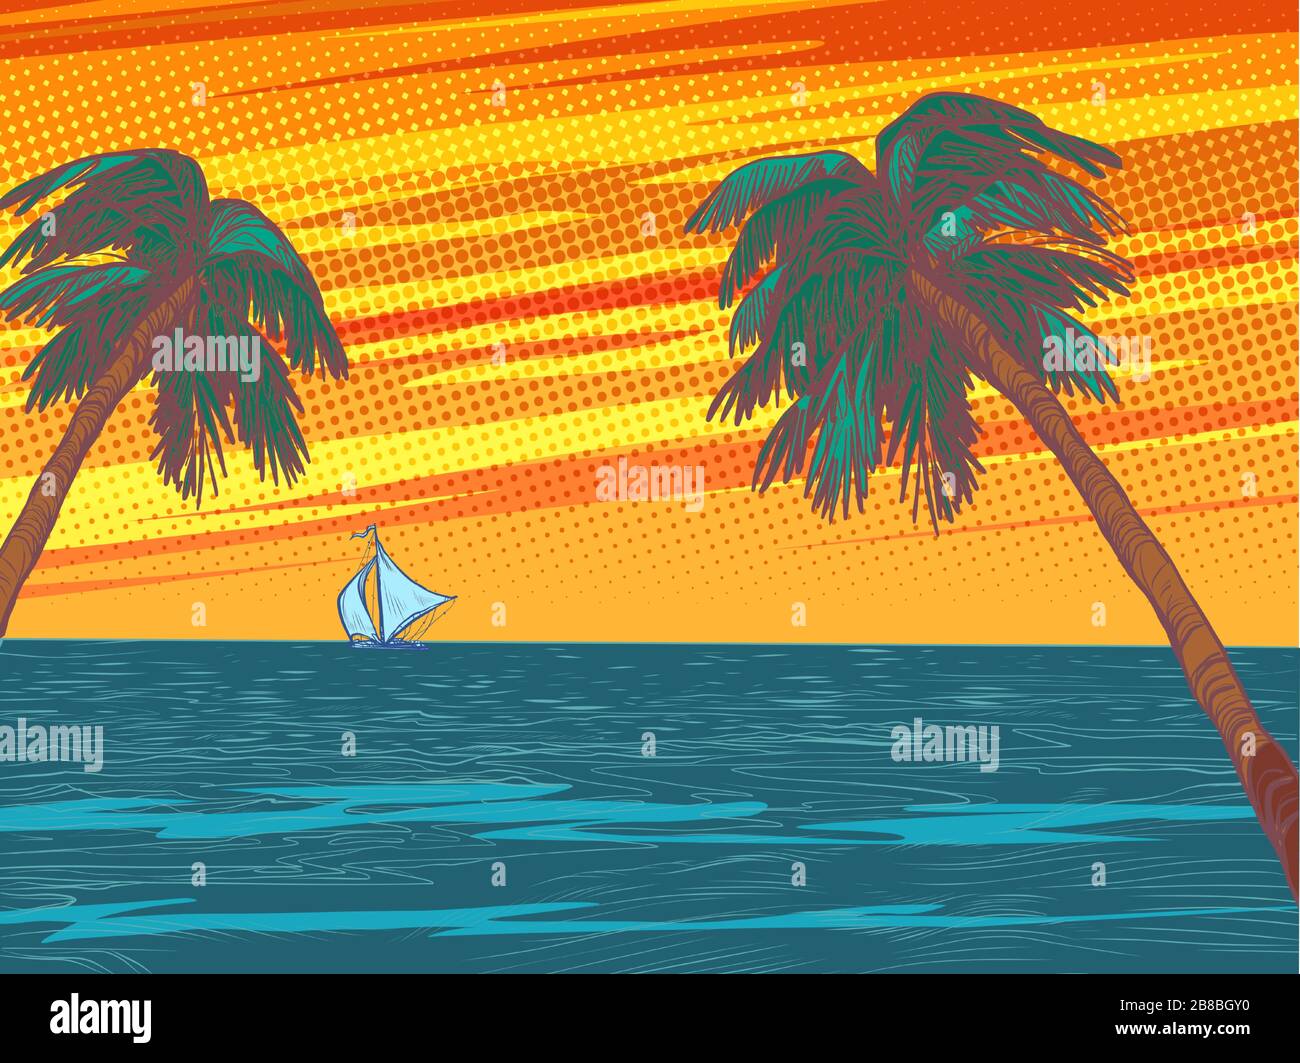 sunset beach resort palmiers arbres mer Illustration de Vecteur